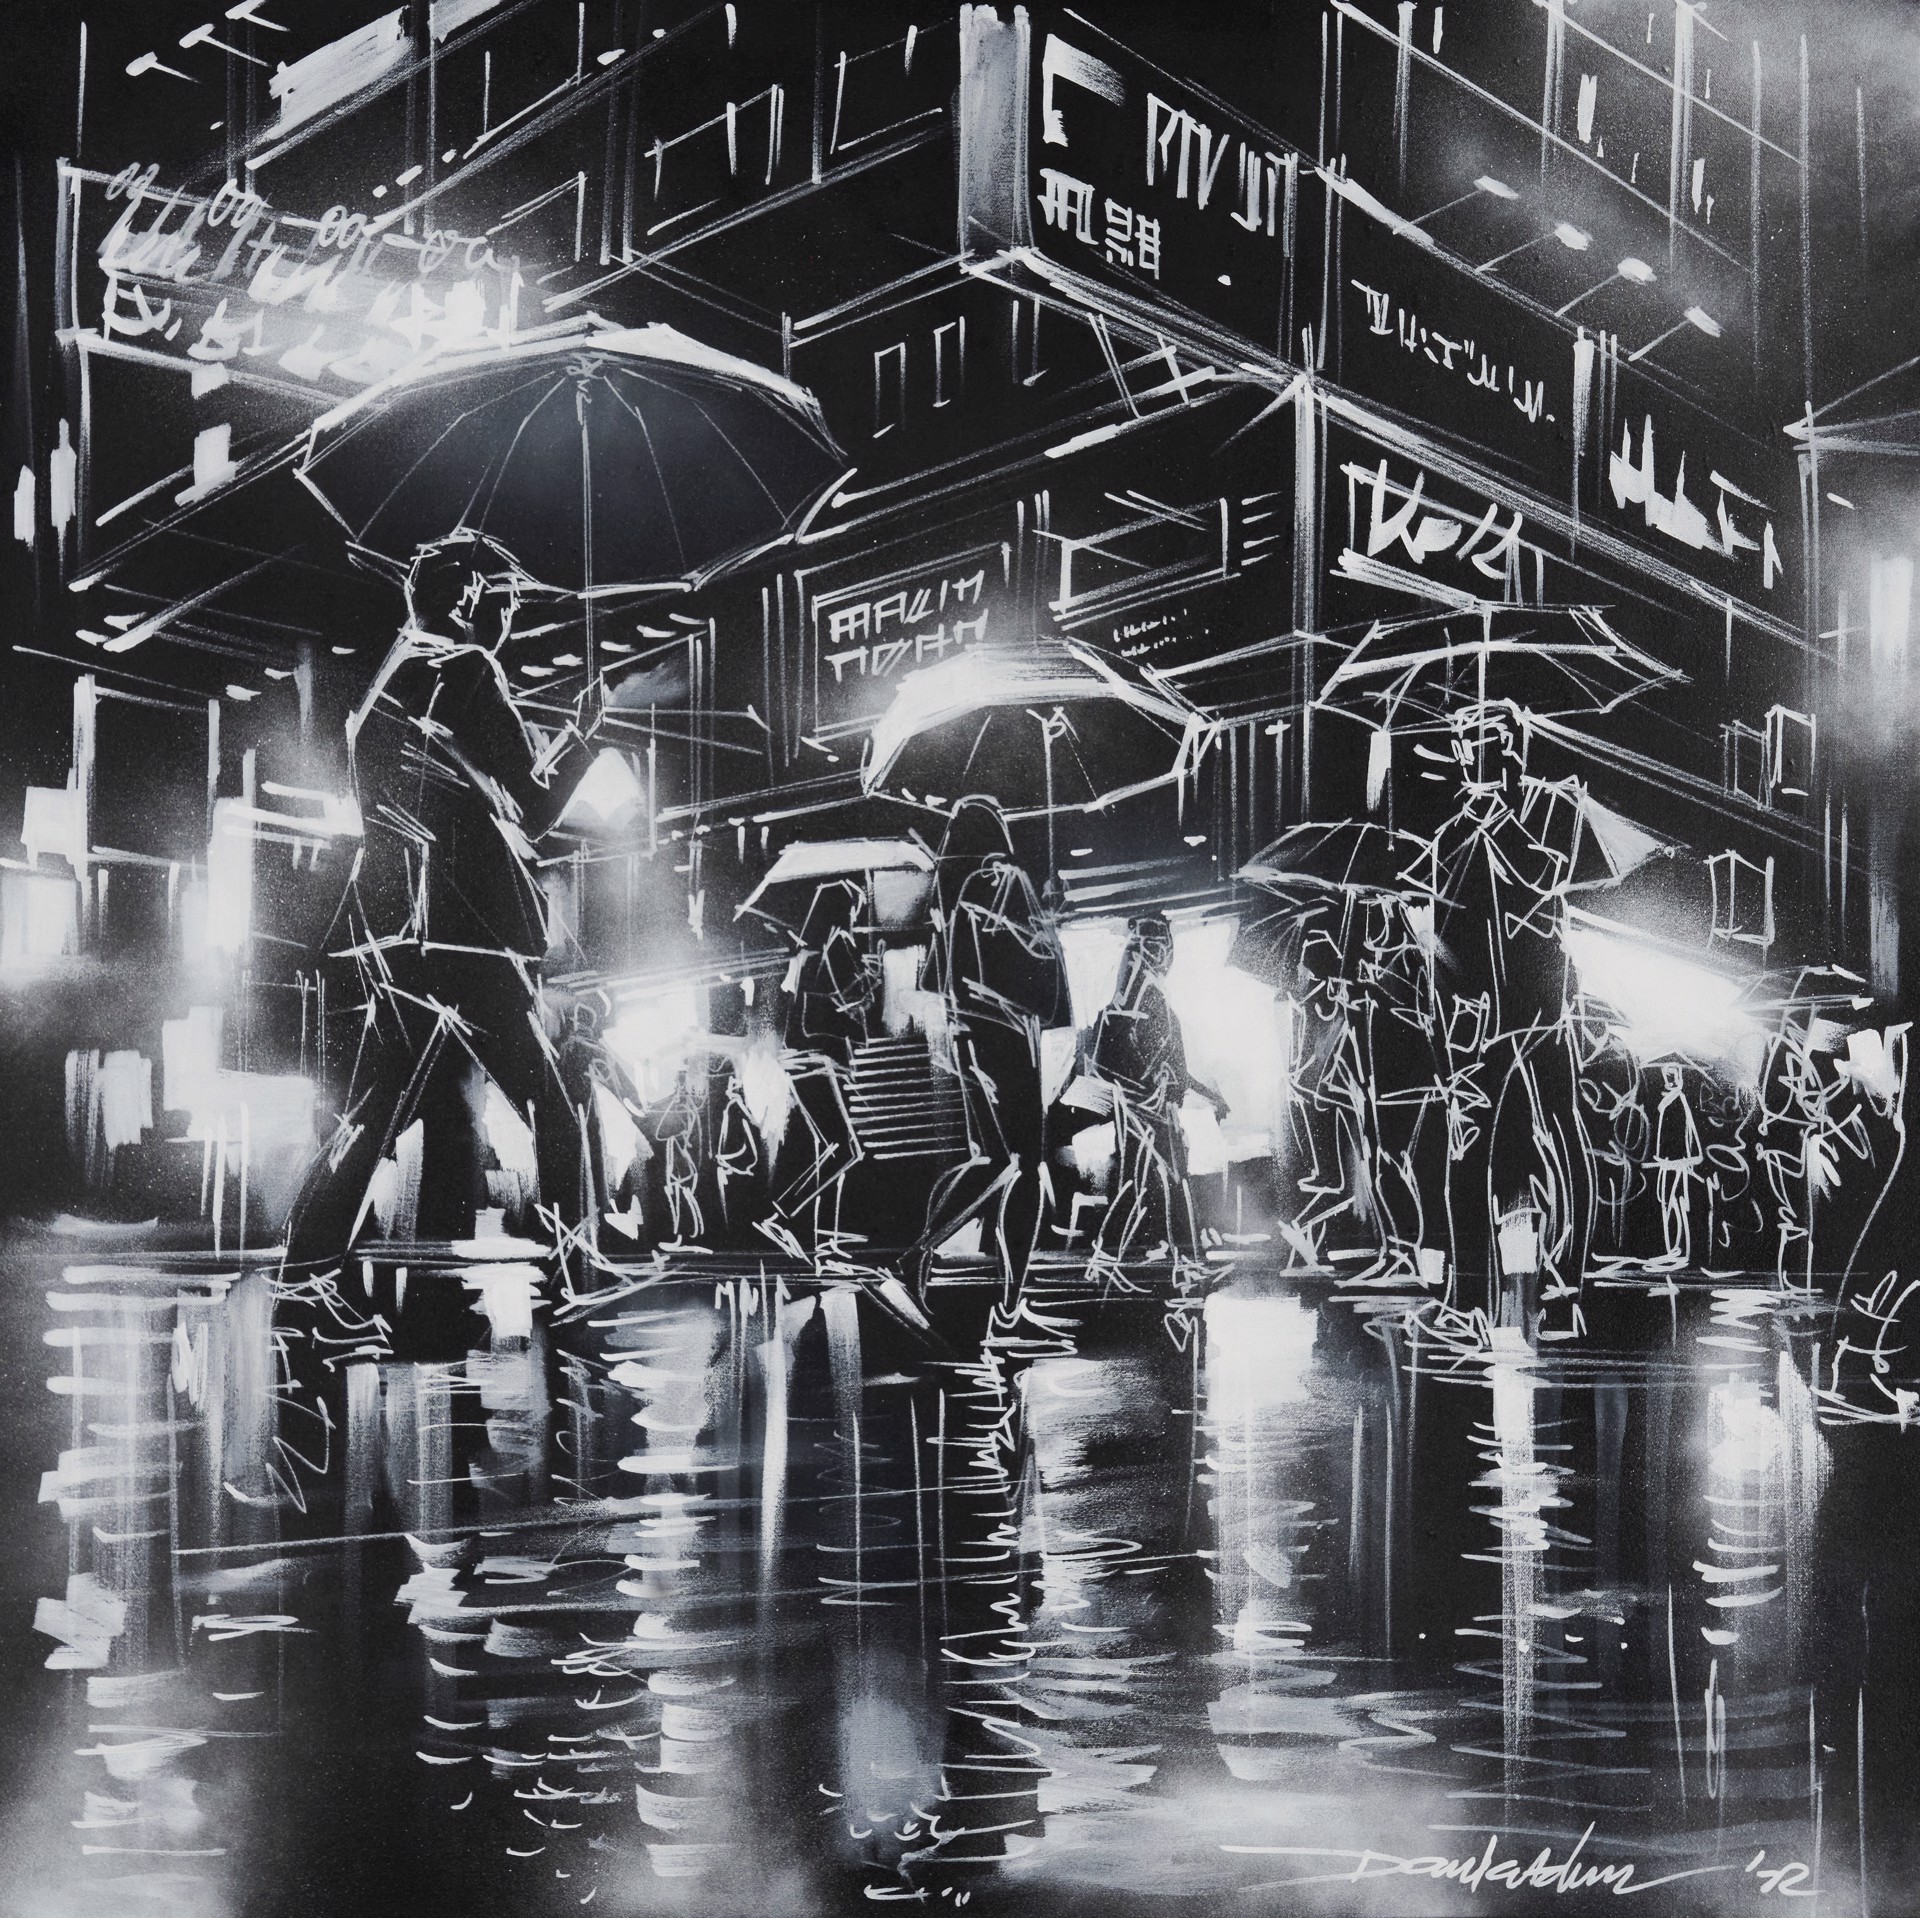 City Glow by Dan Kitchener